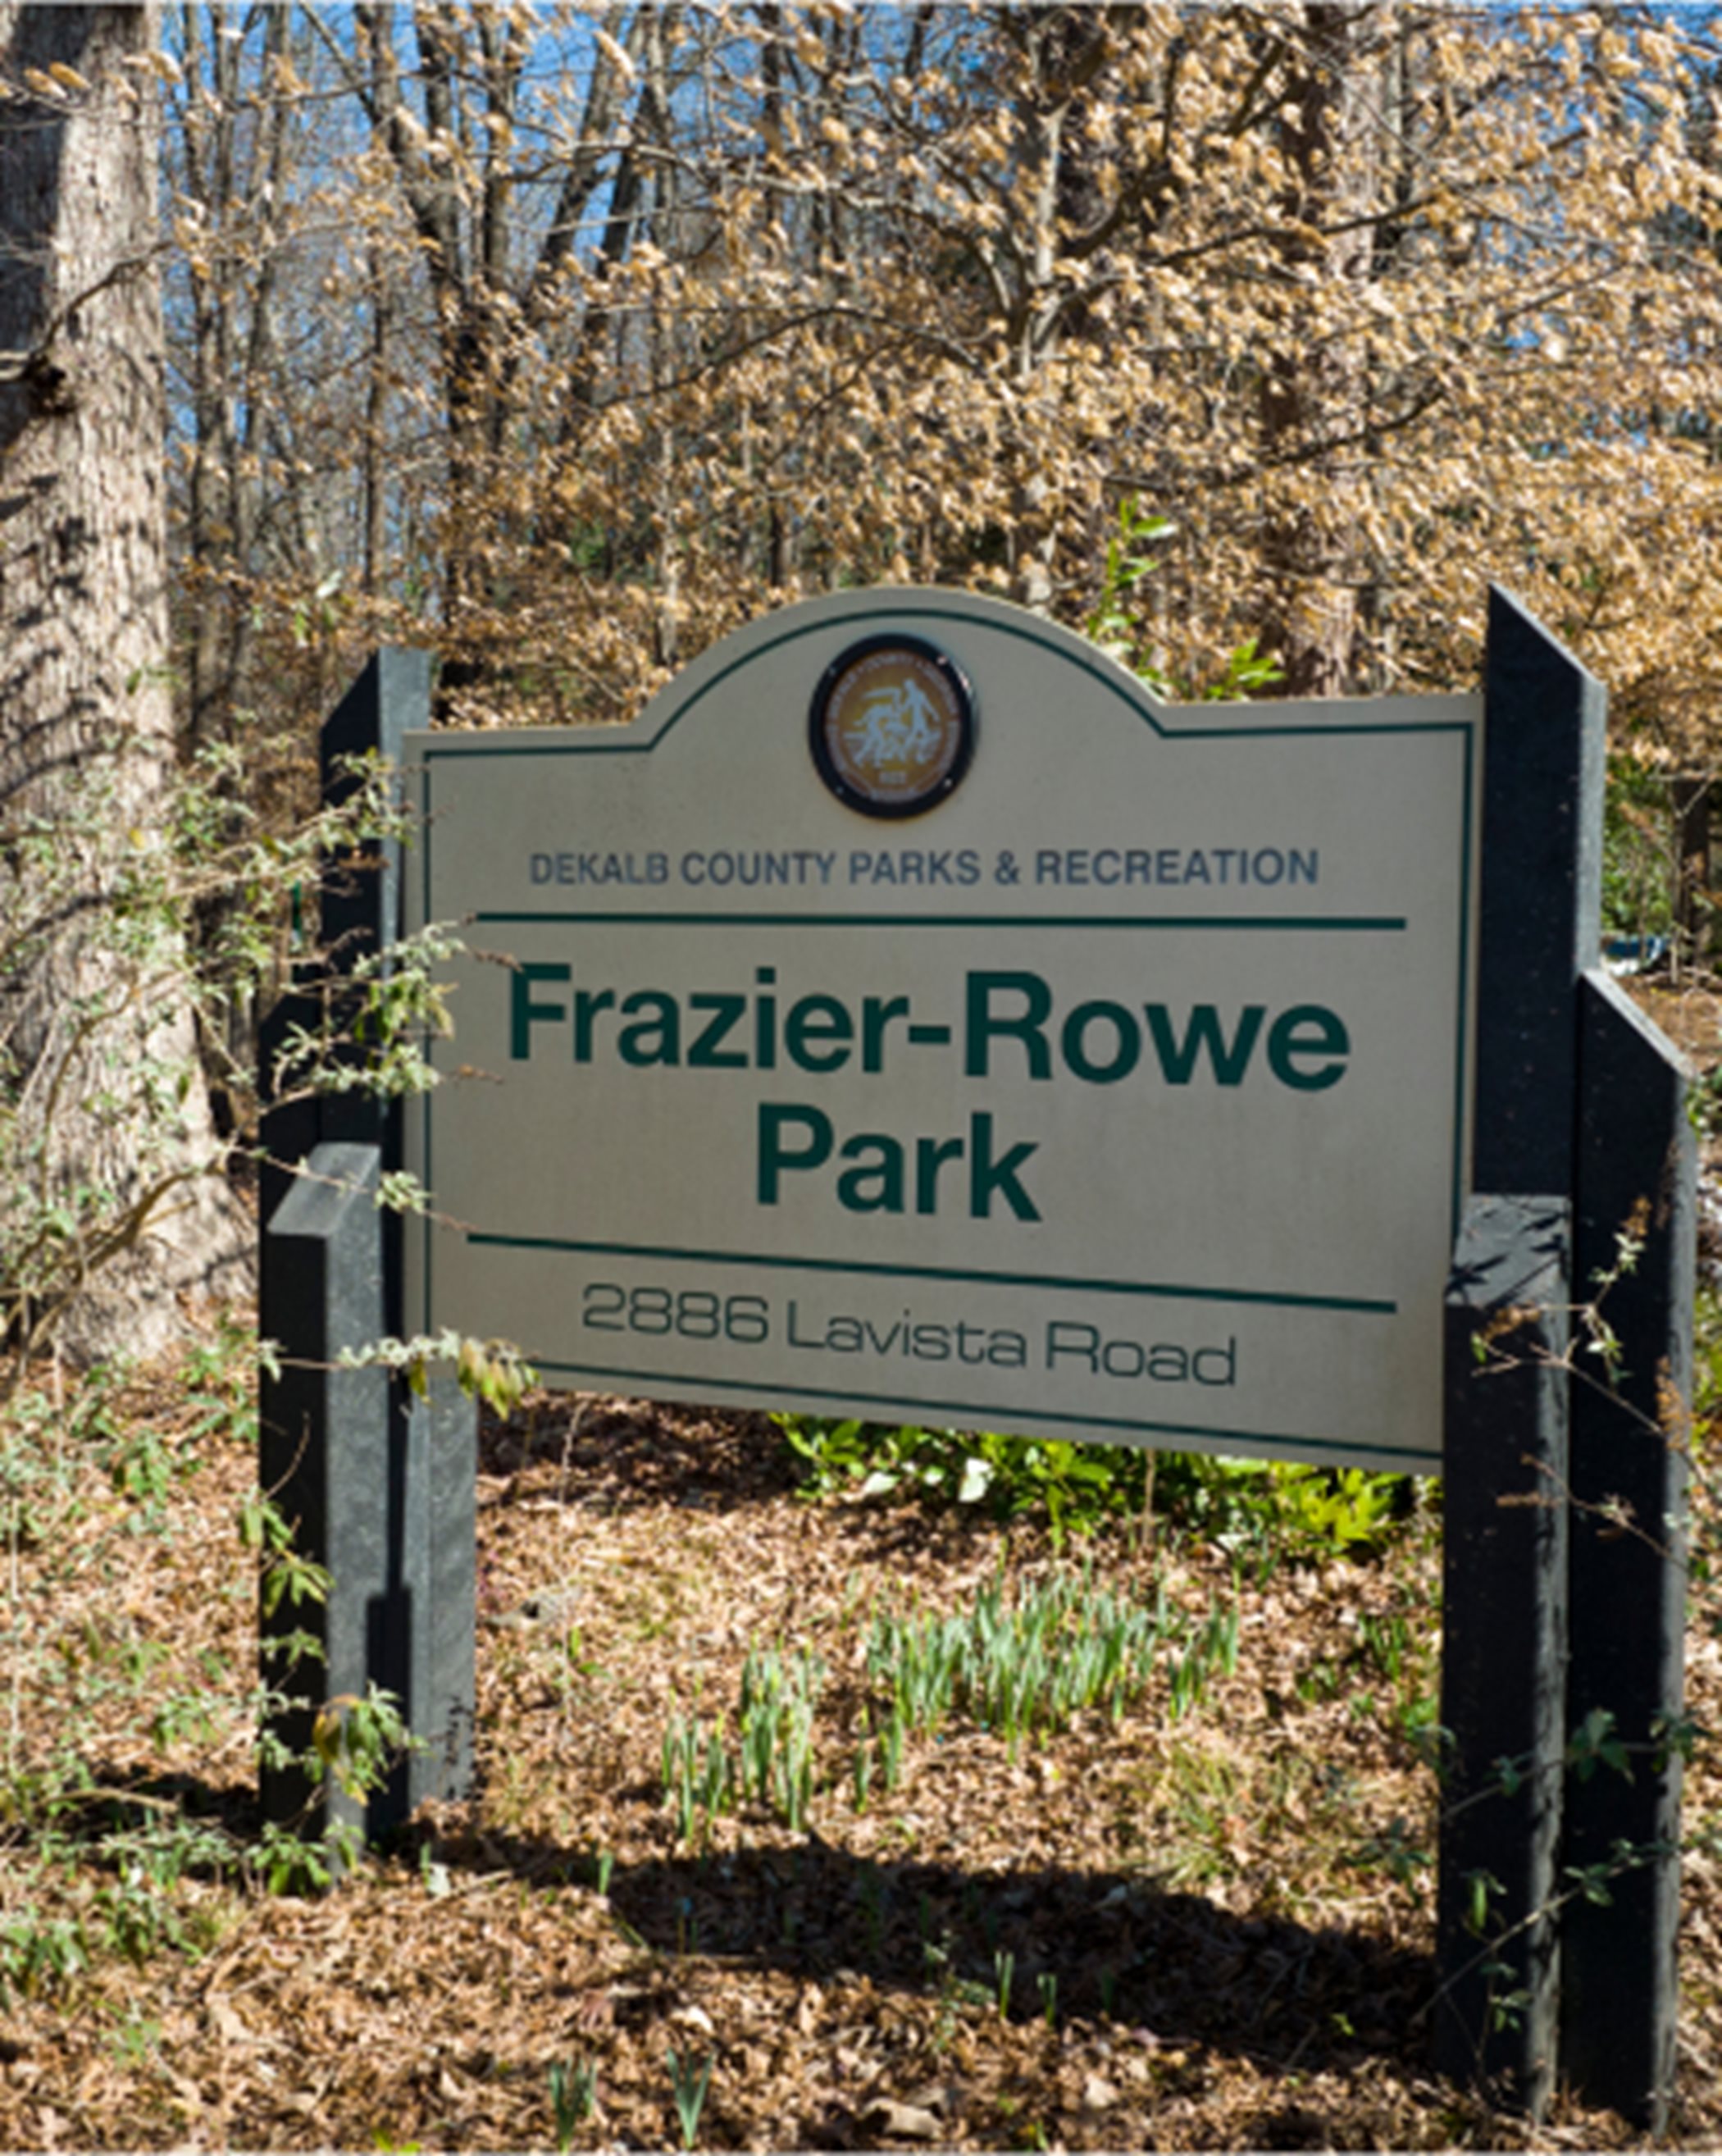 Frazier-Rowe Park